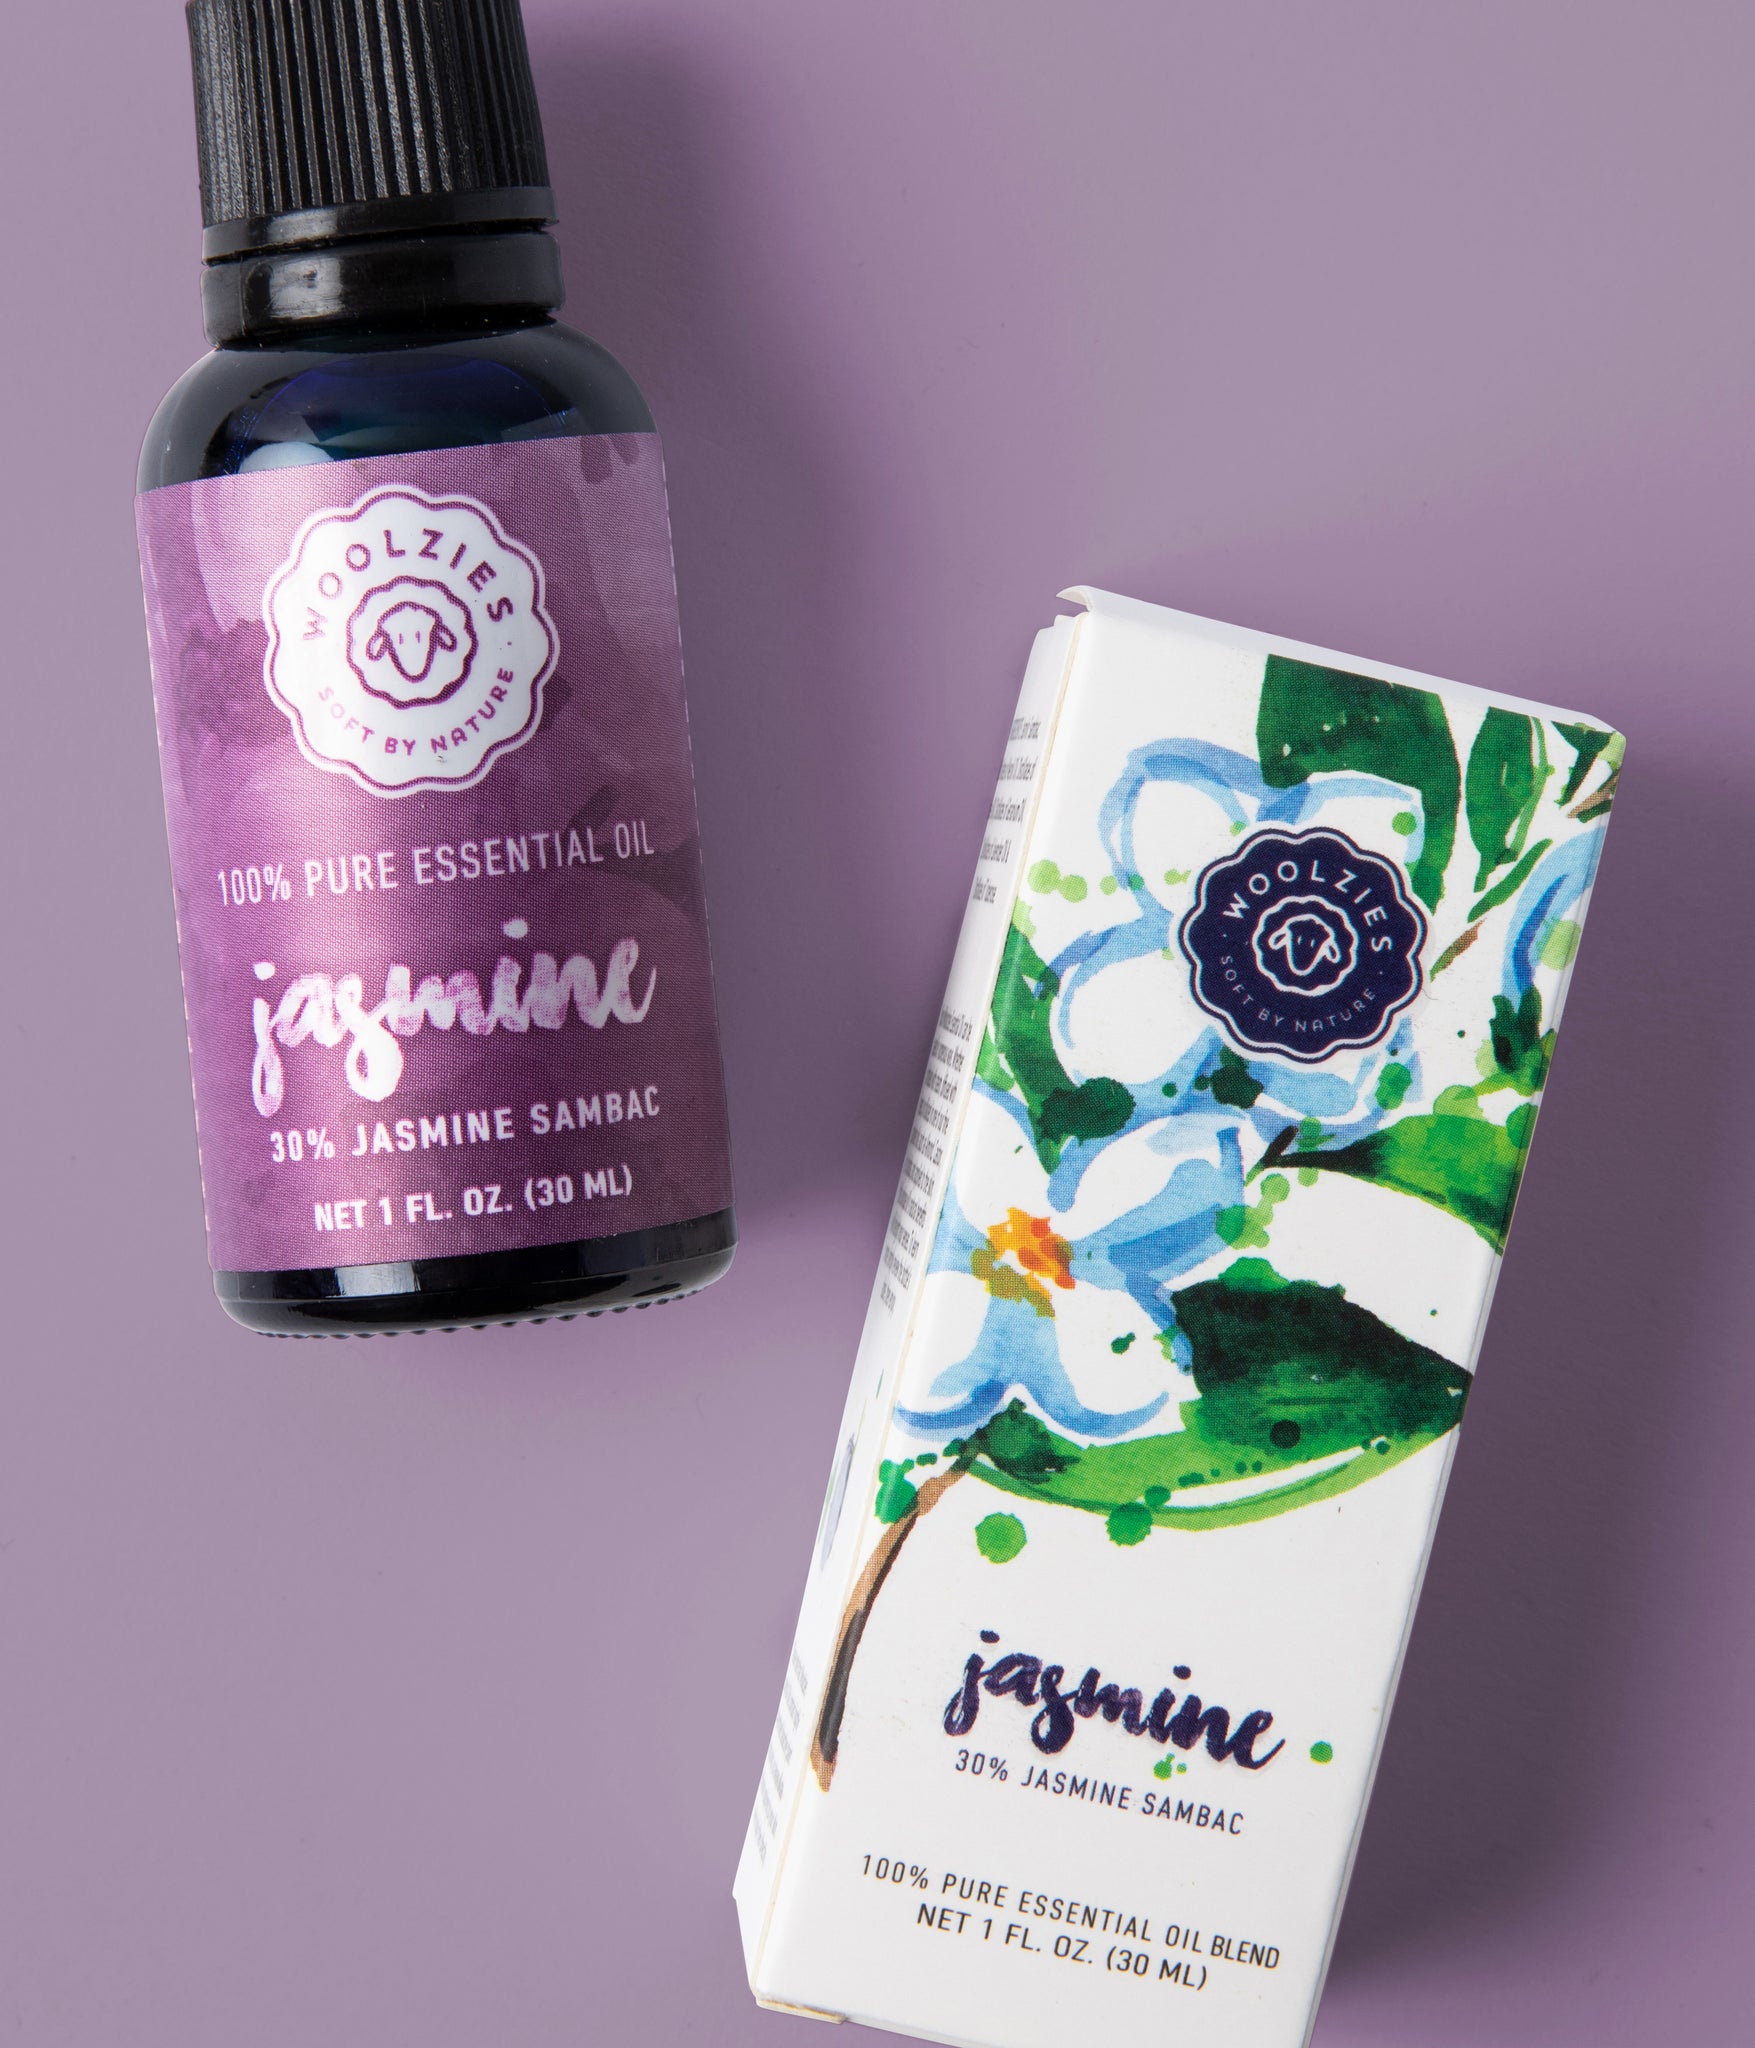 Sedbuwza Gardenia Oil Jasmine Essential Oil Gift Set, 100% Pure